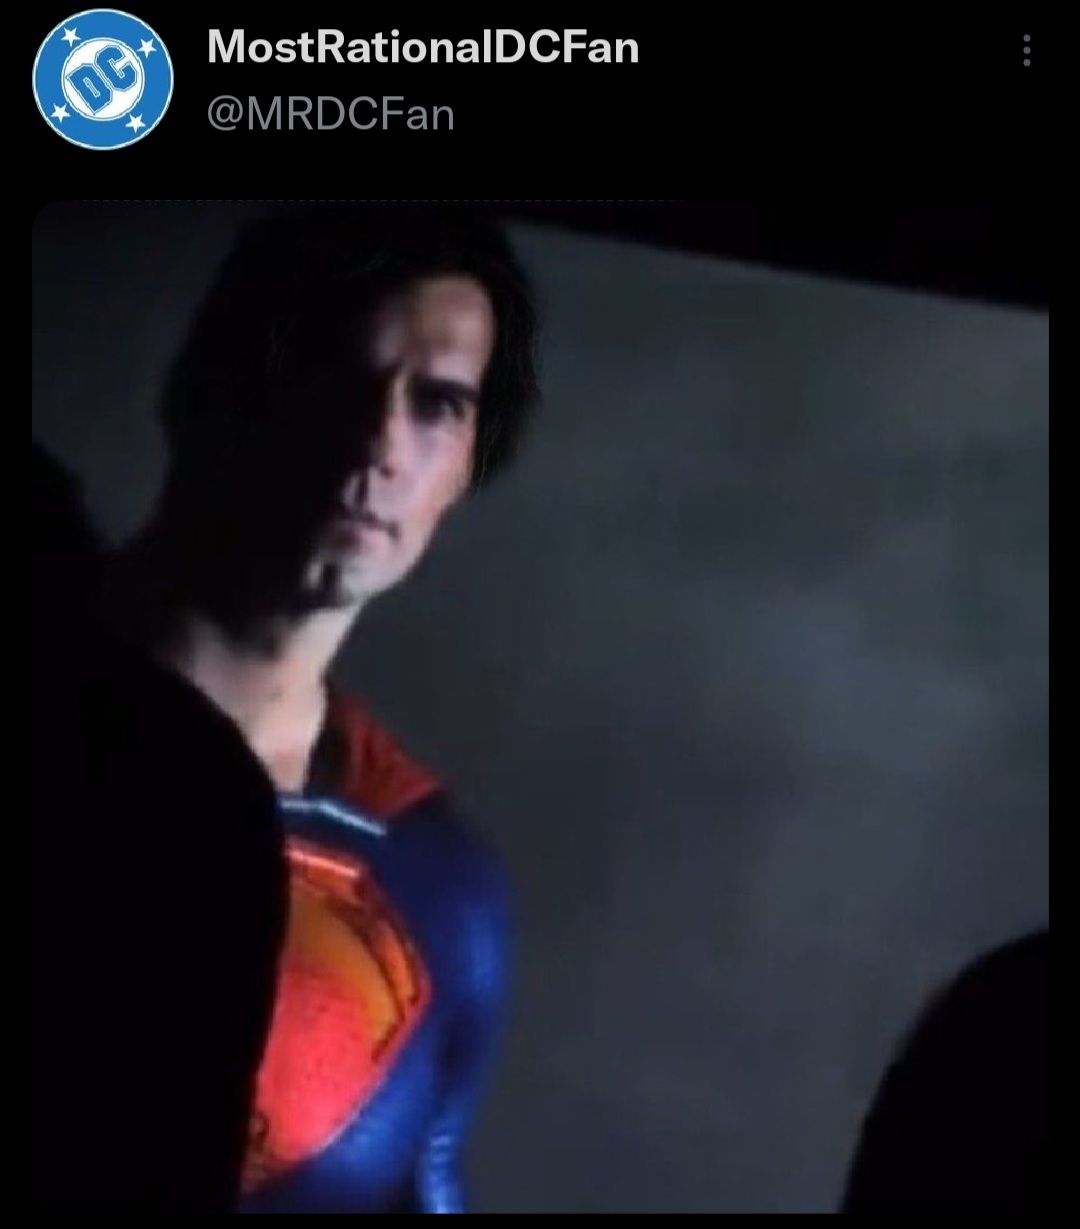 Black Adam: Henry Cavill to Return as Superman? New Leak Reveals